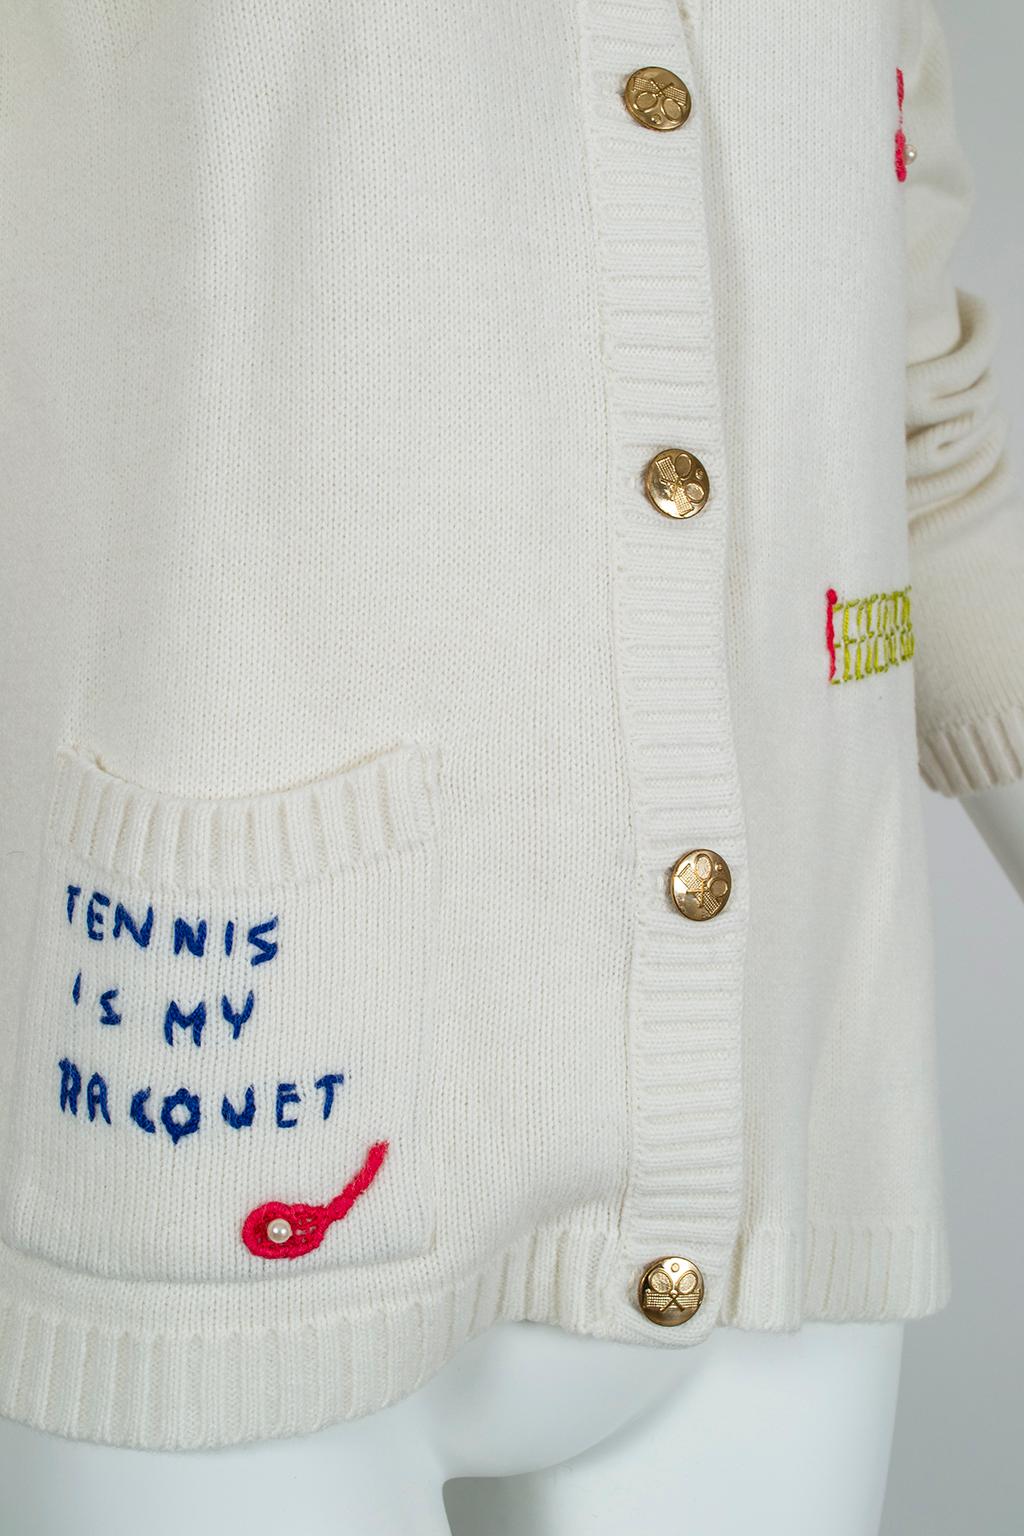 Tennis is my Racquet Ivory Novelty Appliqué Cardigan Sweater - M-L, 1960s 1